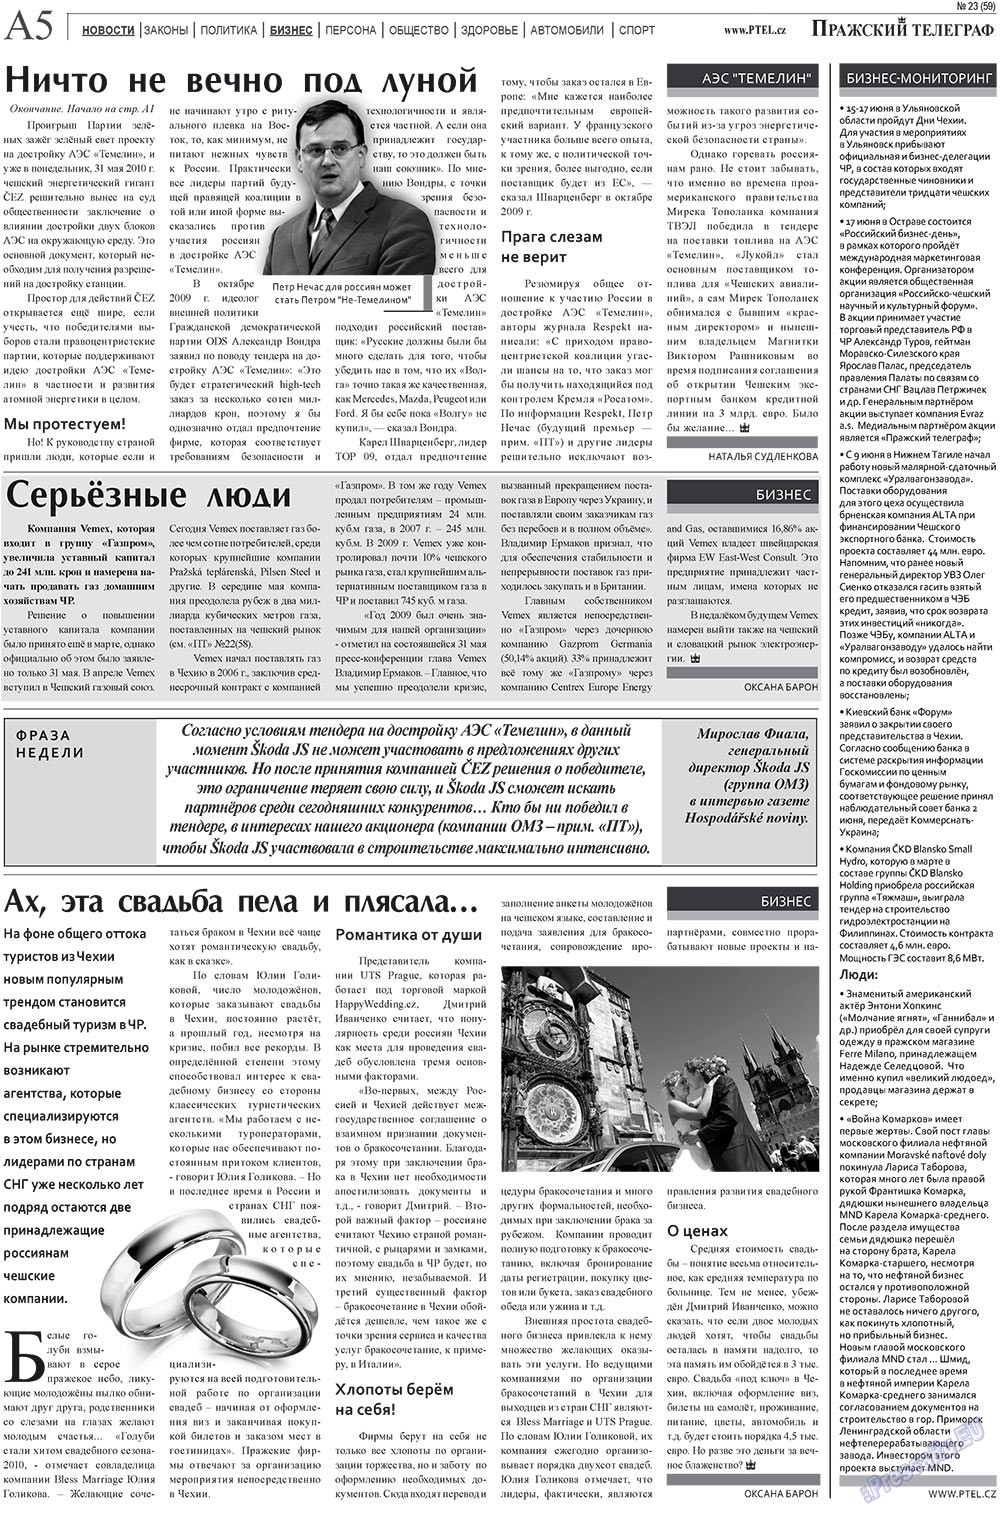 Пражский телеграф, газета. 2010 №23 стр.5